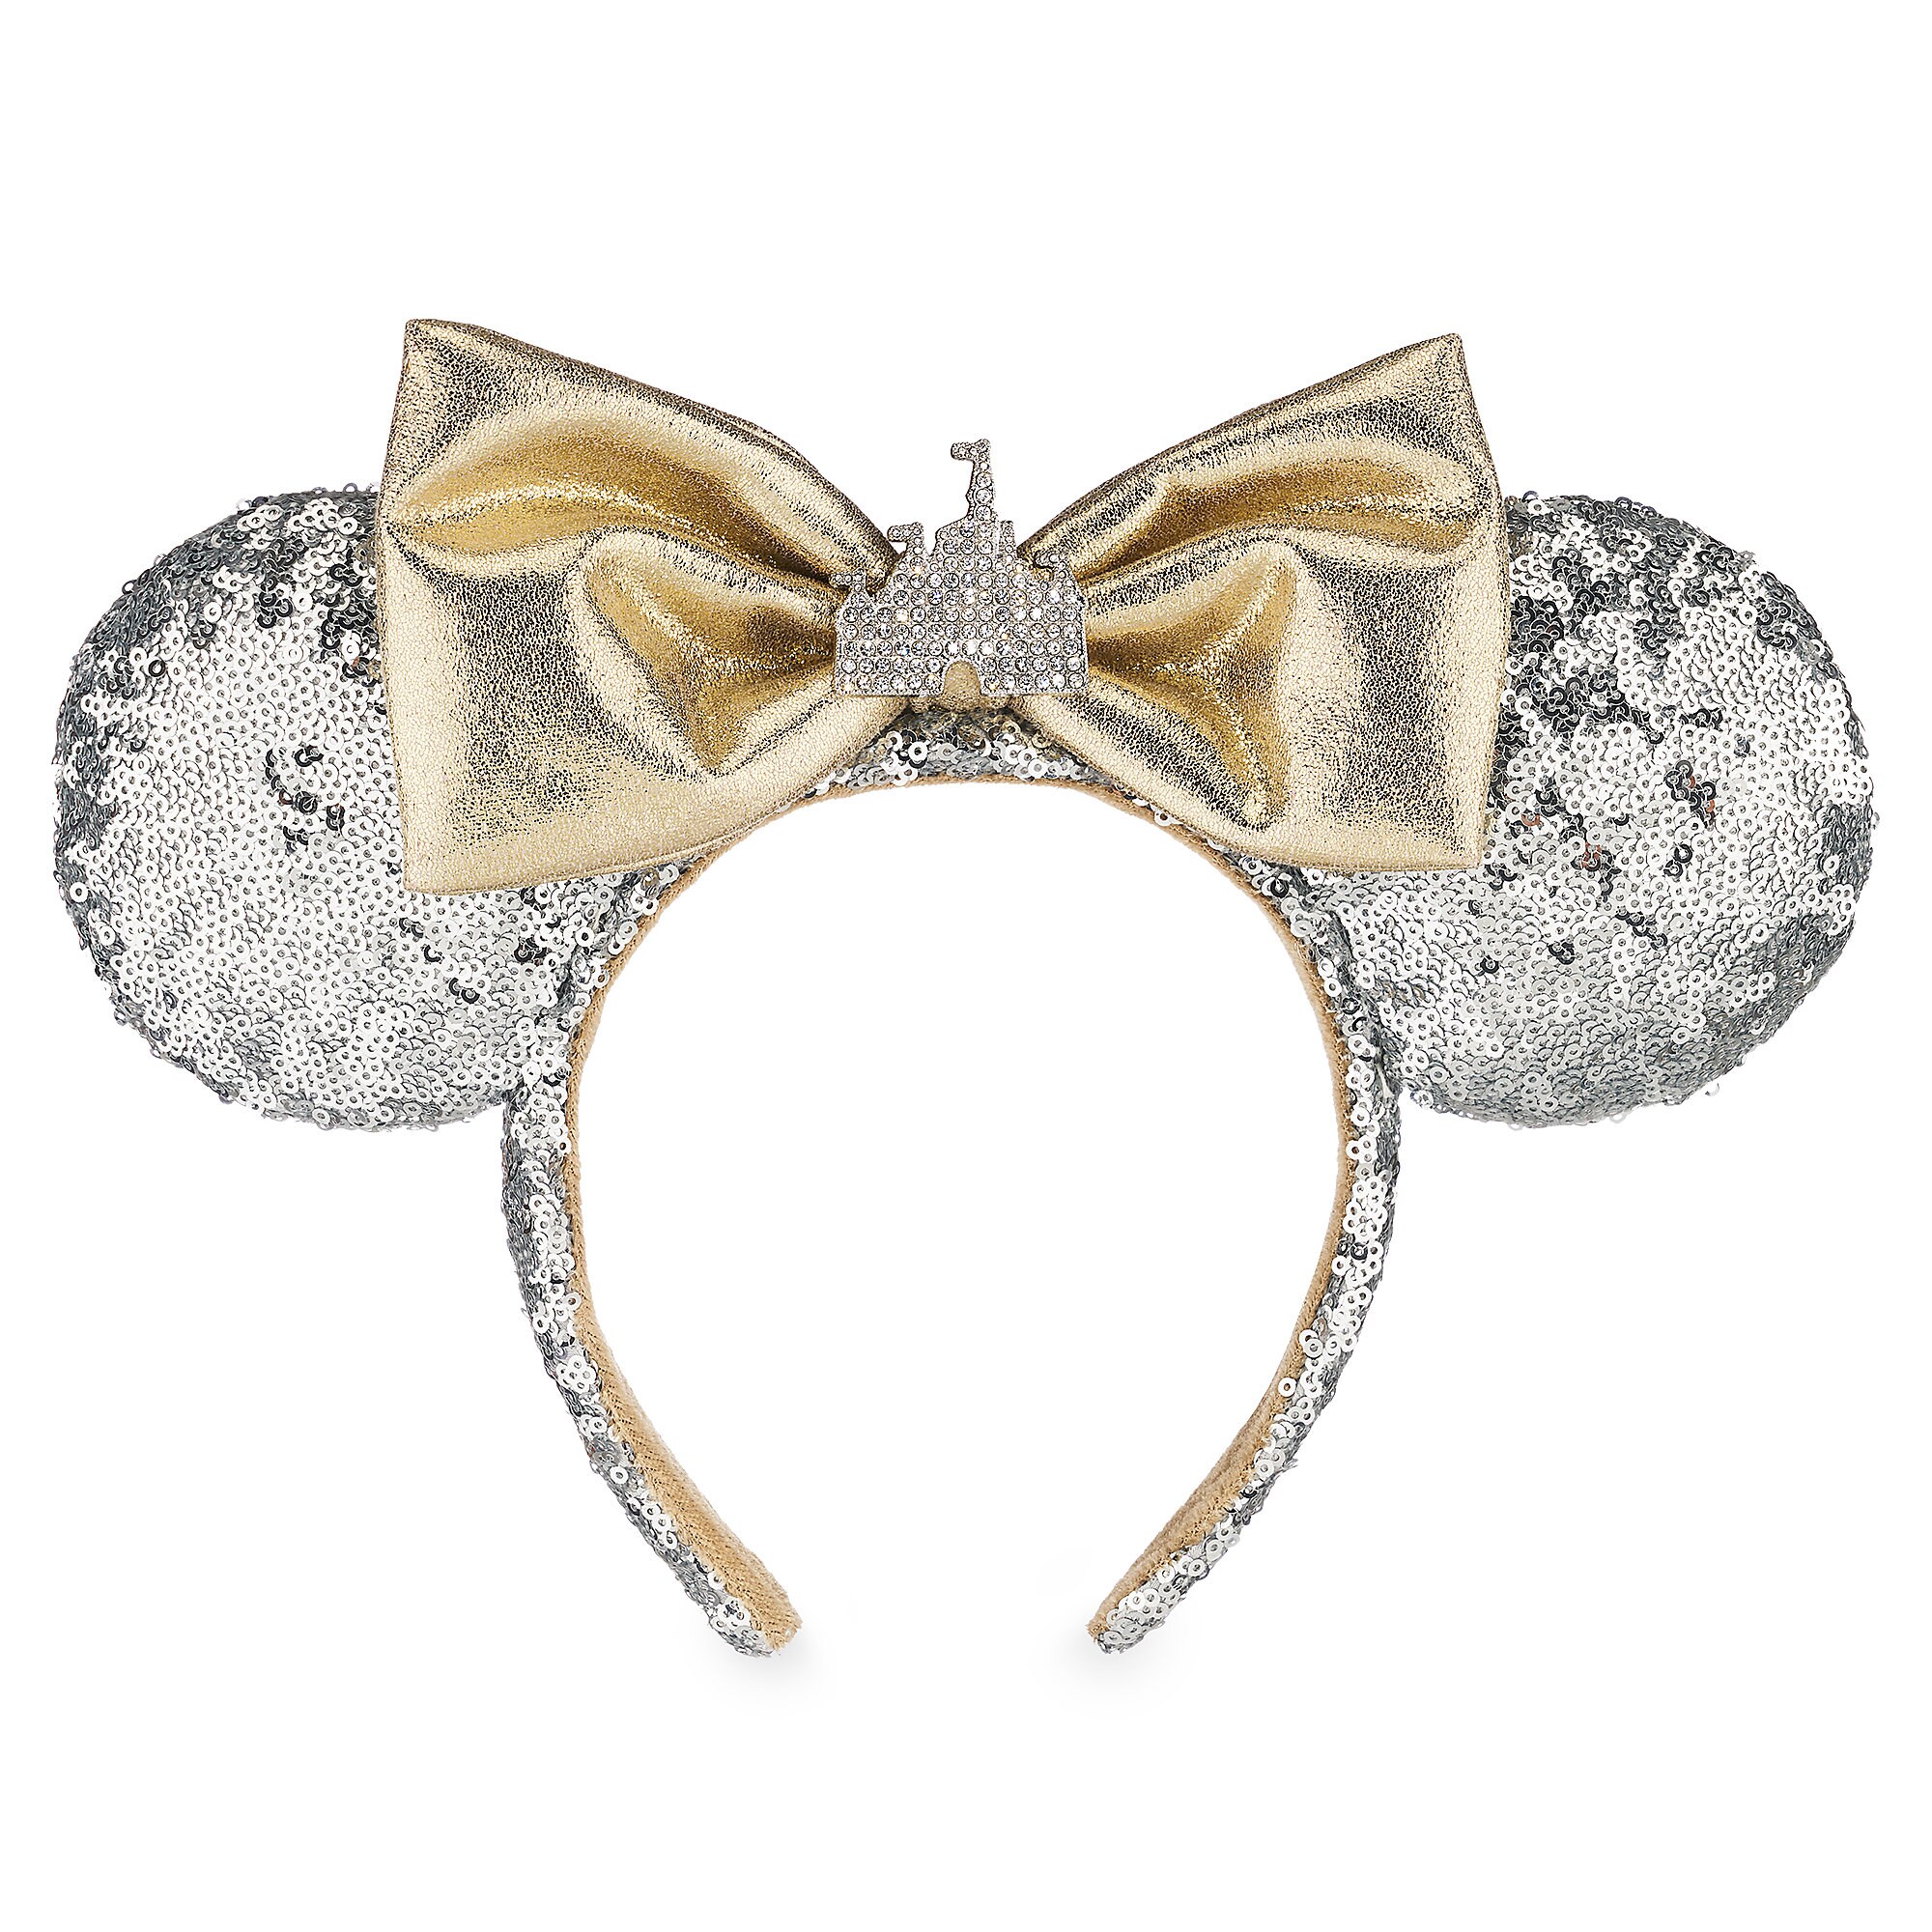 Minnie Mouse Sleeping Beauty Castle Ear Headband - Silver Sequins - Disneyland